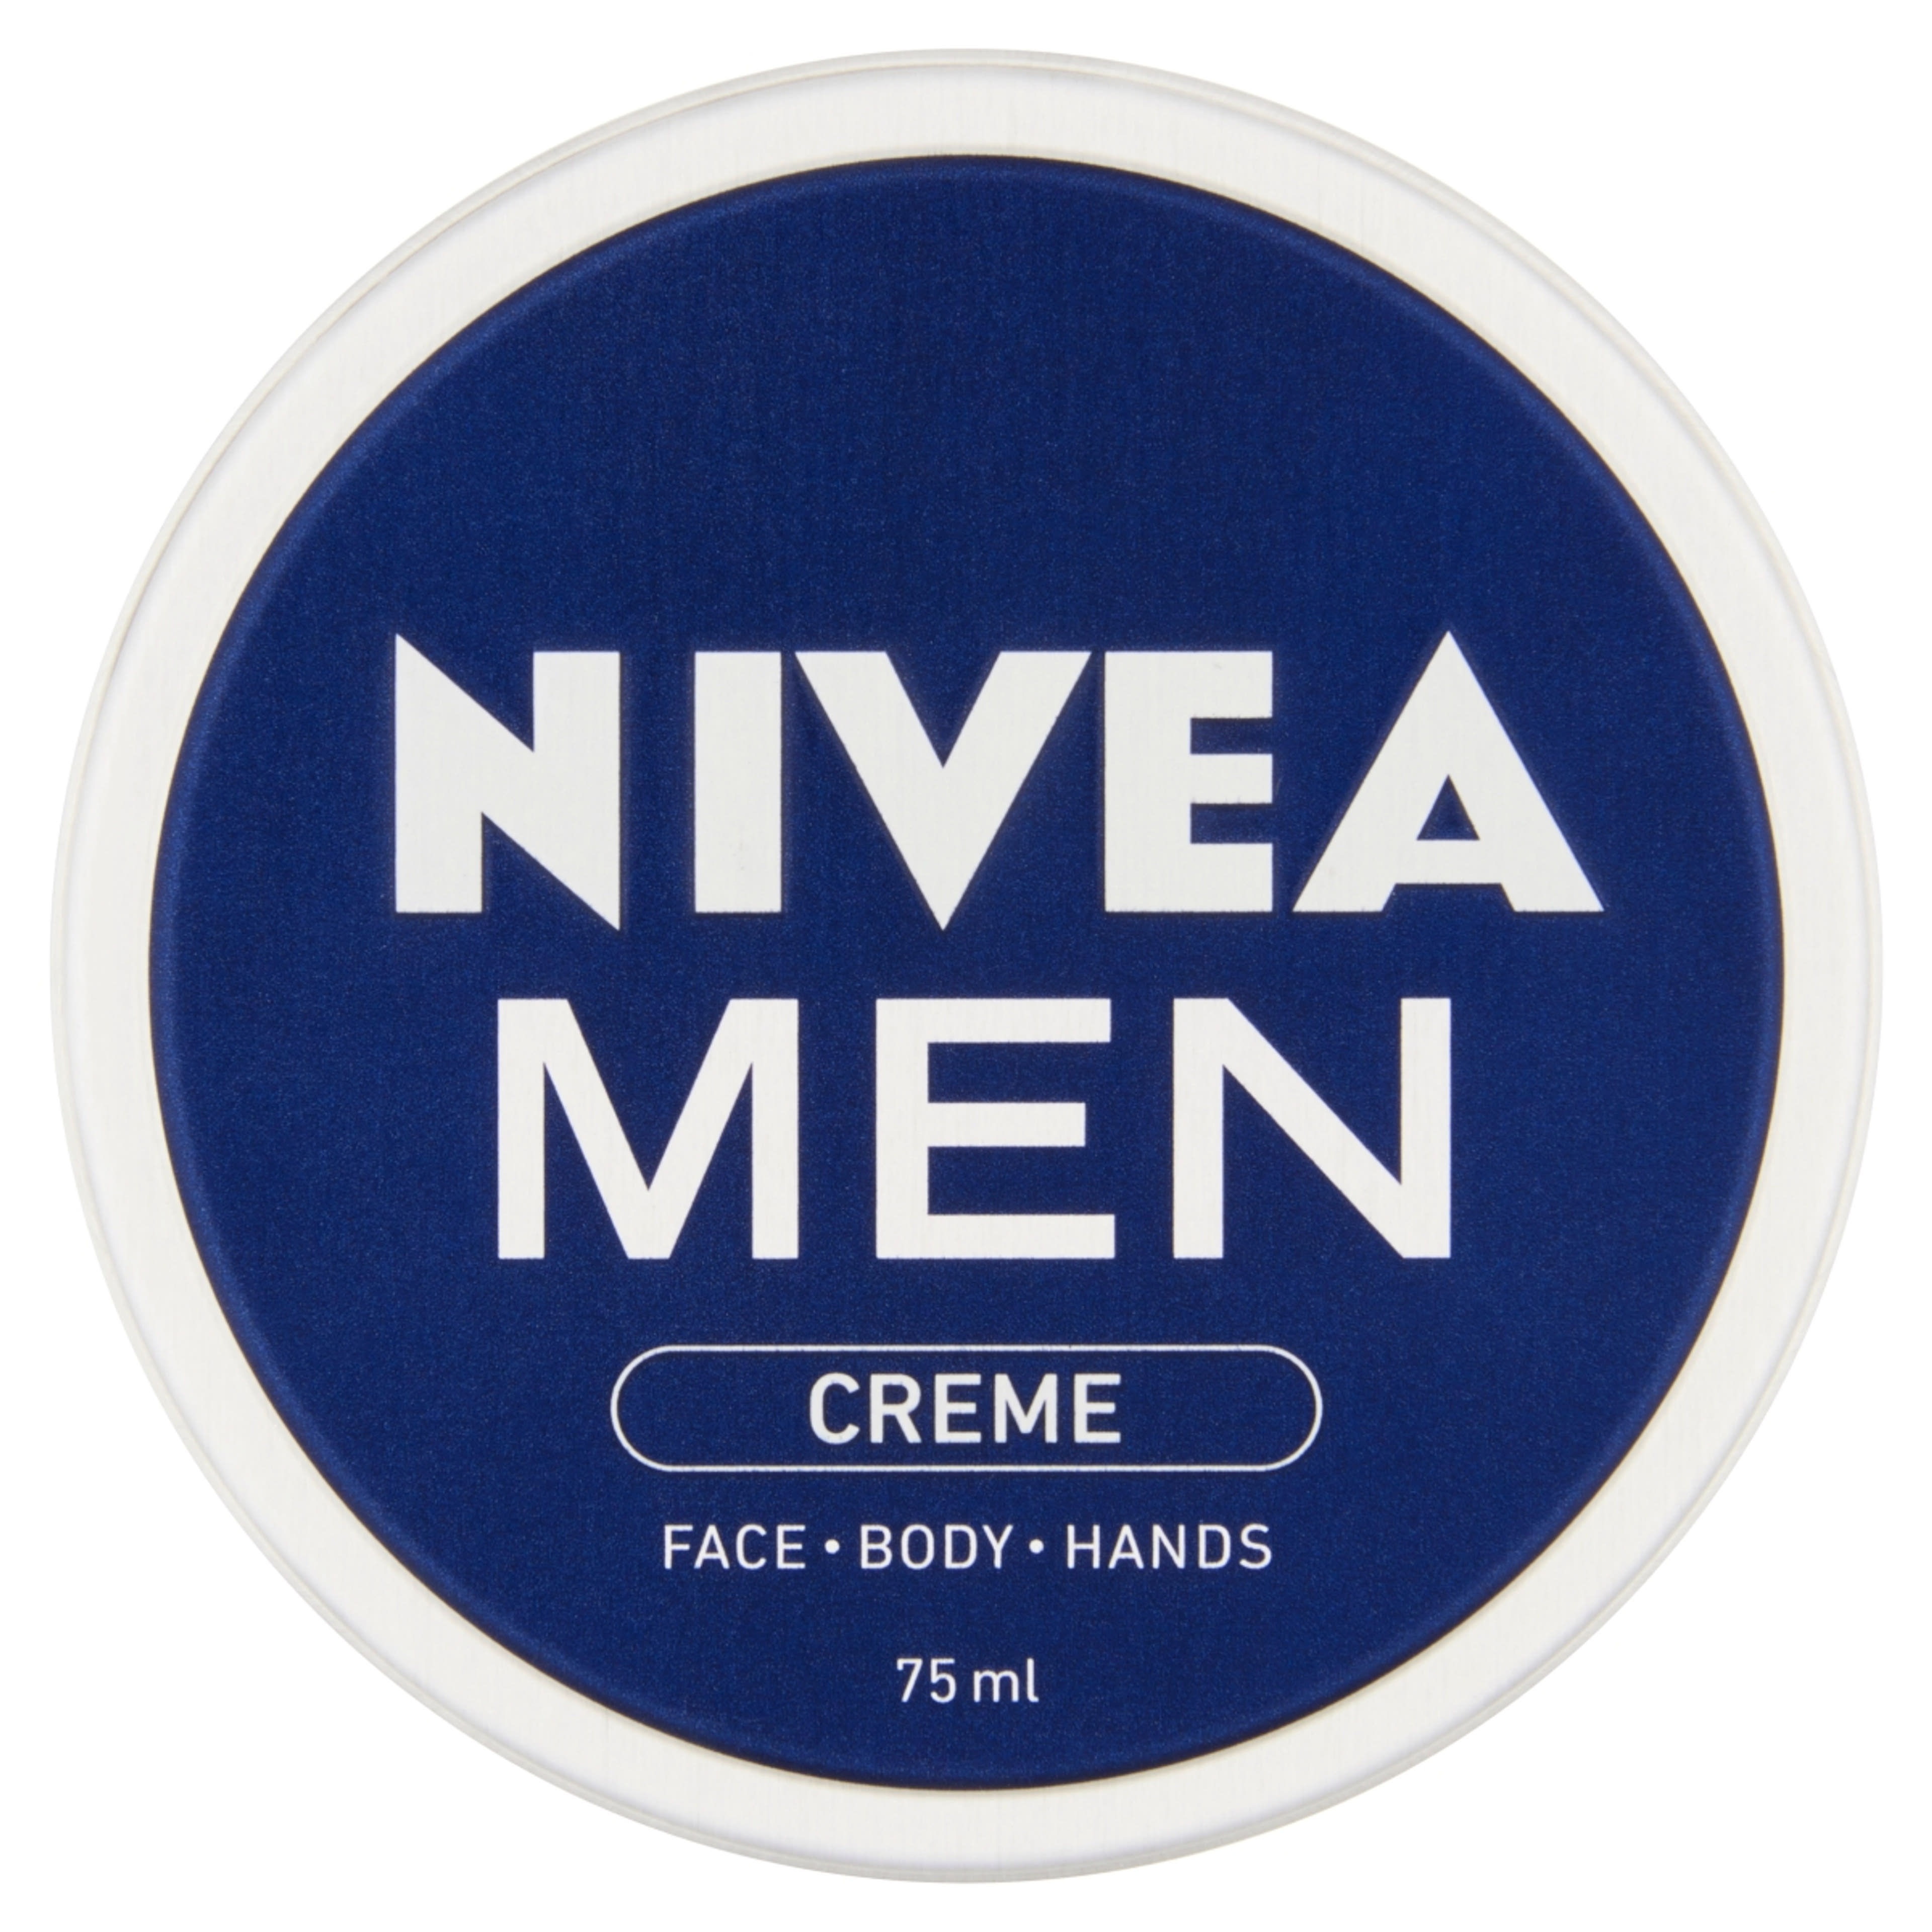 NIVEA MEN Creme - 75 ml